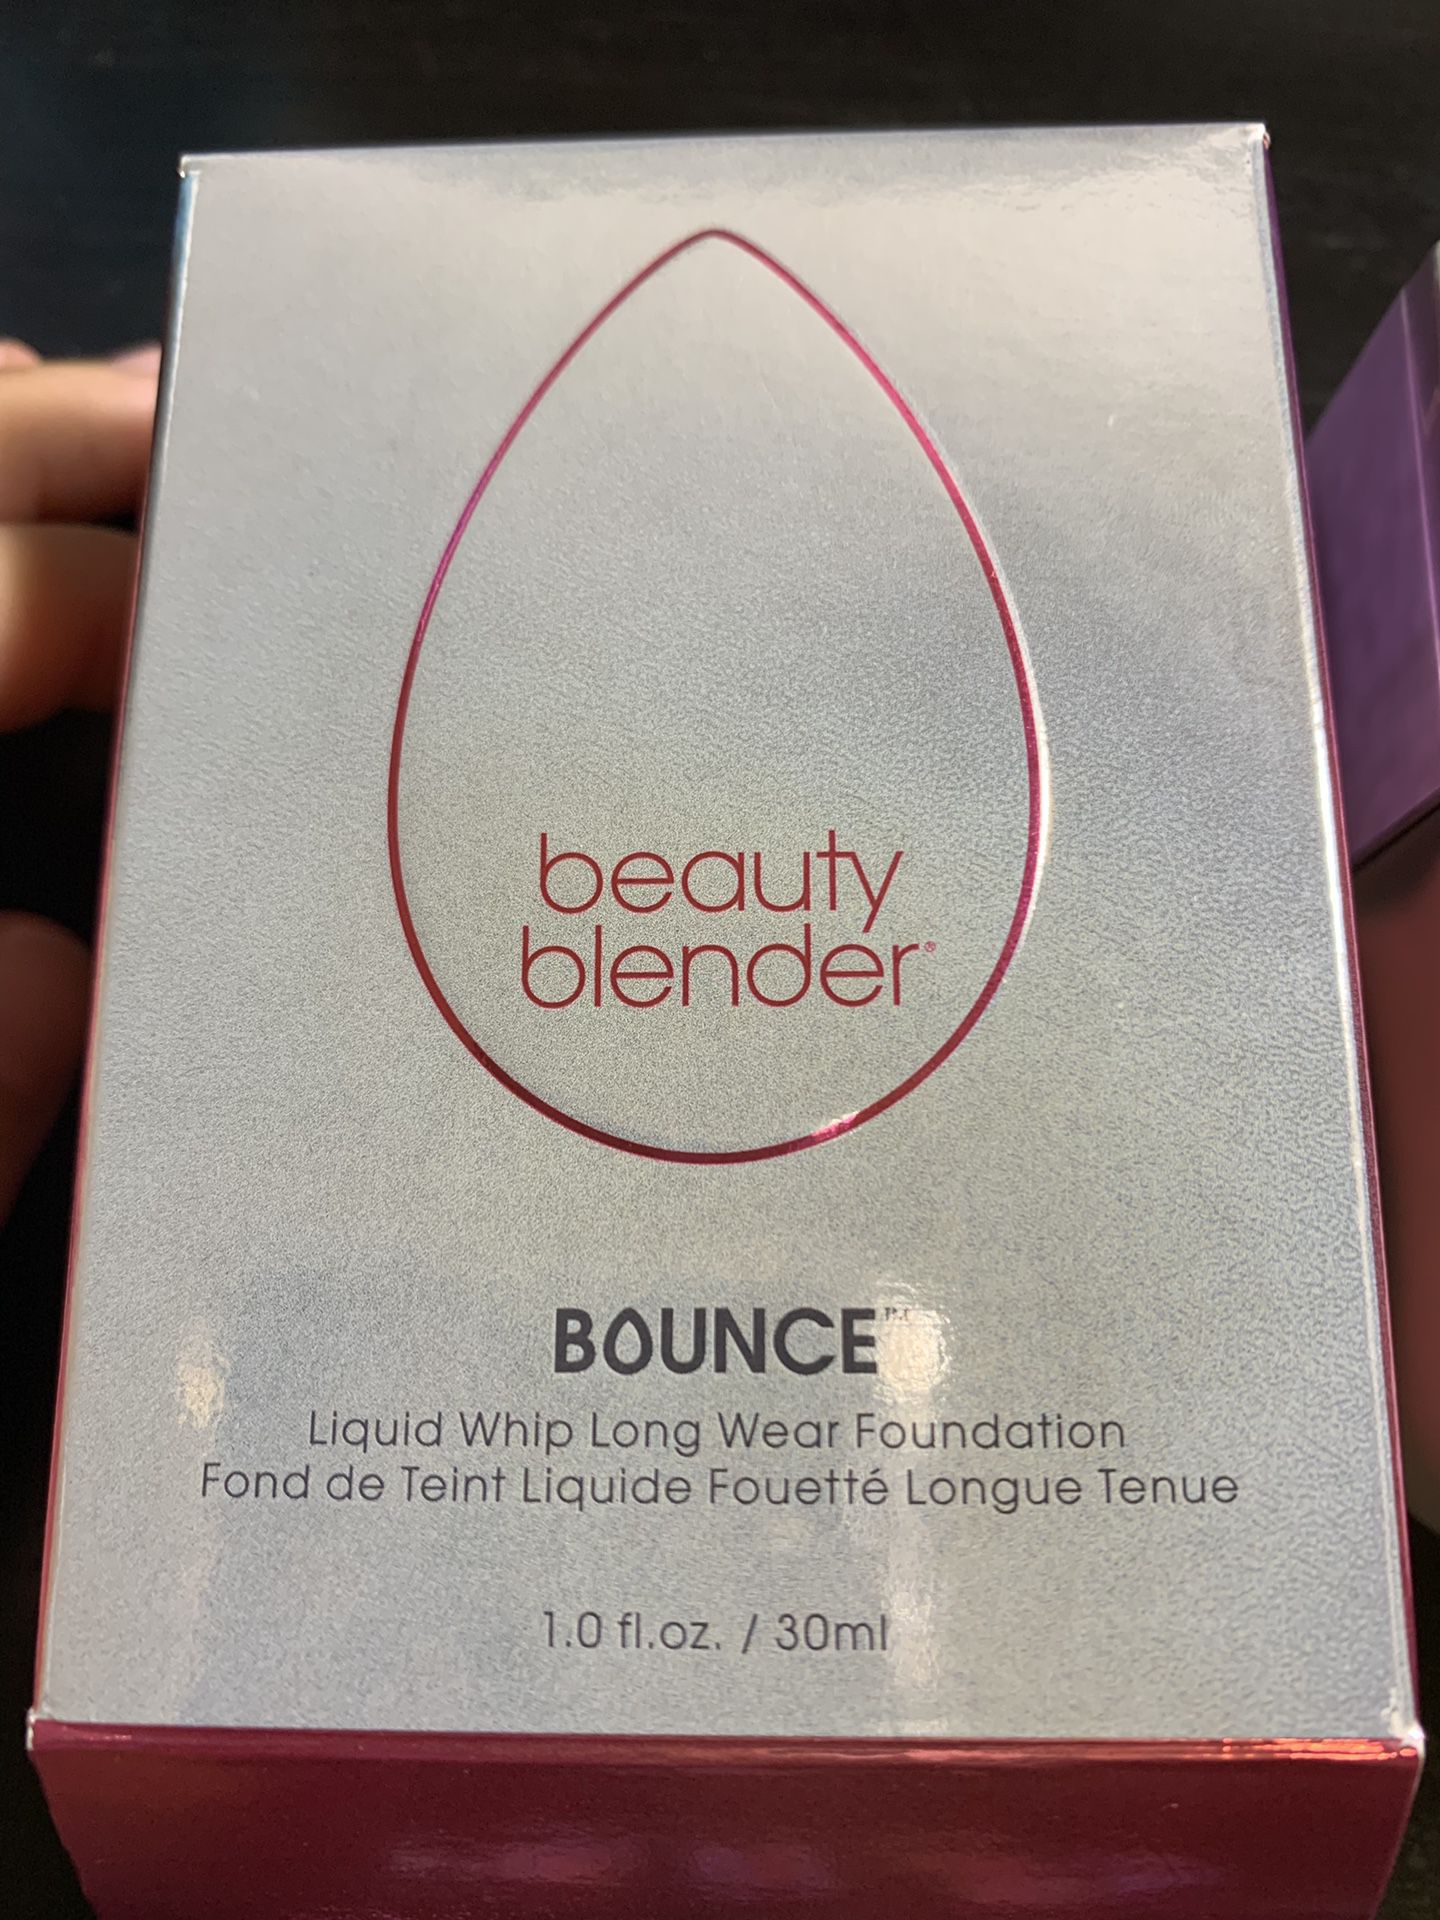 Beauty blender foundation